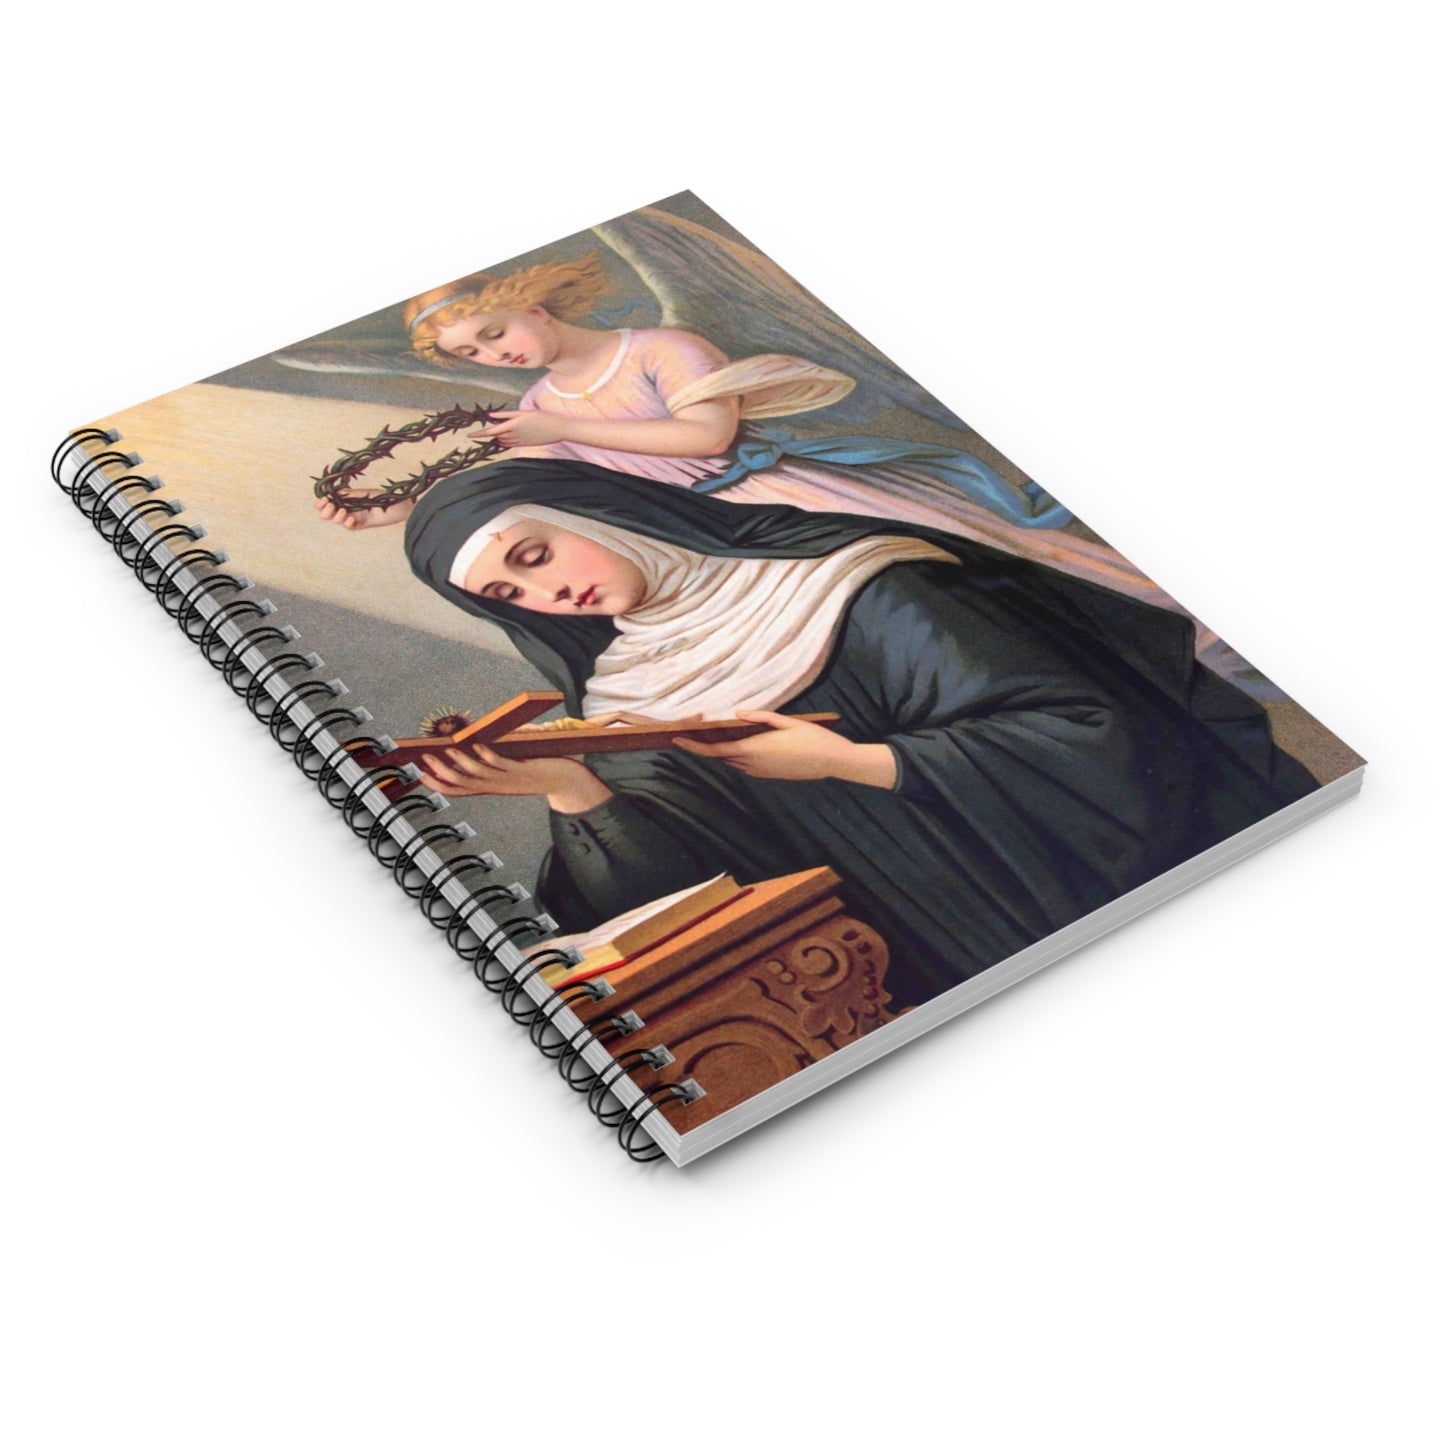 Saint Rita of Cascia Adoration Notebook, Religious Journal Christmas Gift Idea for Catholic, Christian Diary, Rita Patron of the Impossible